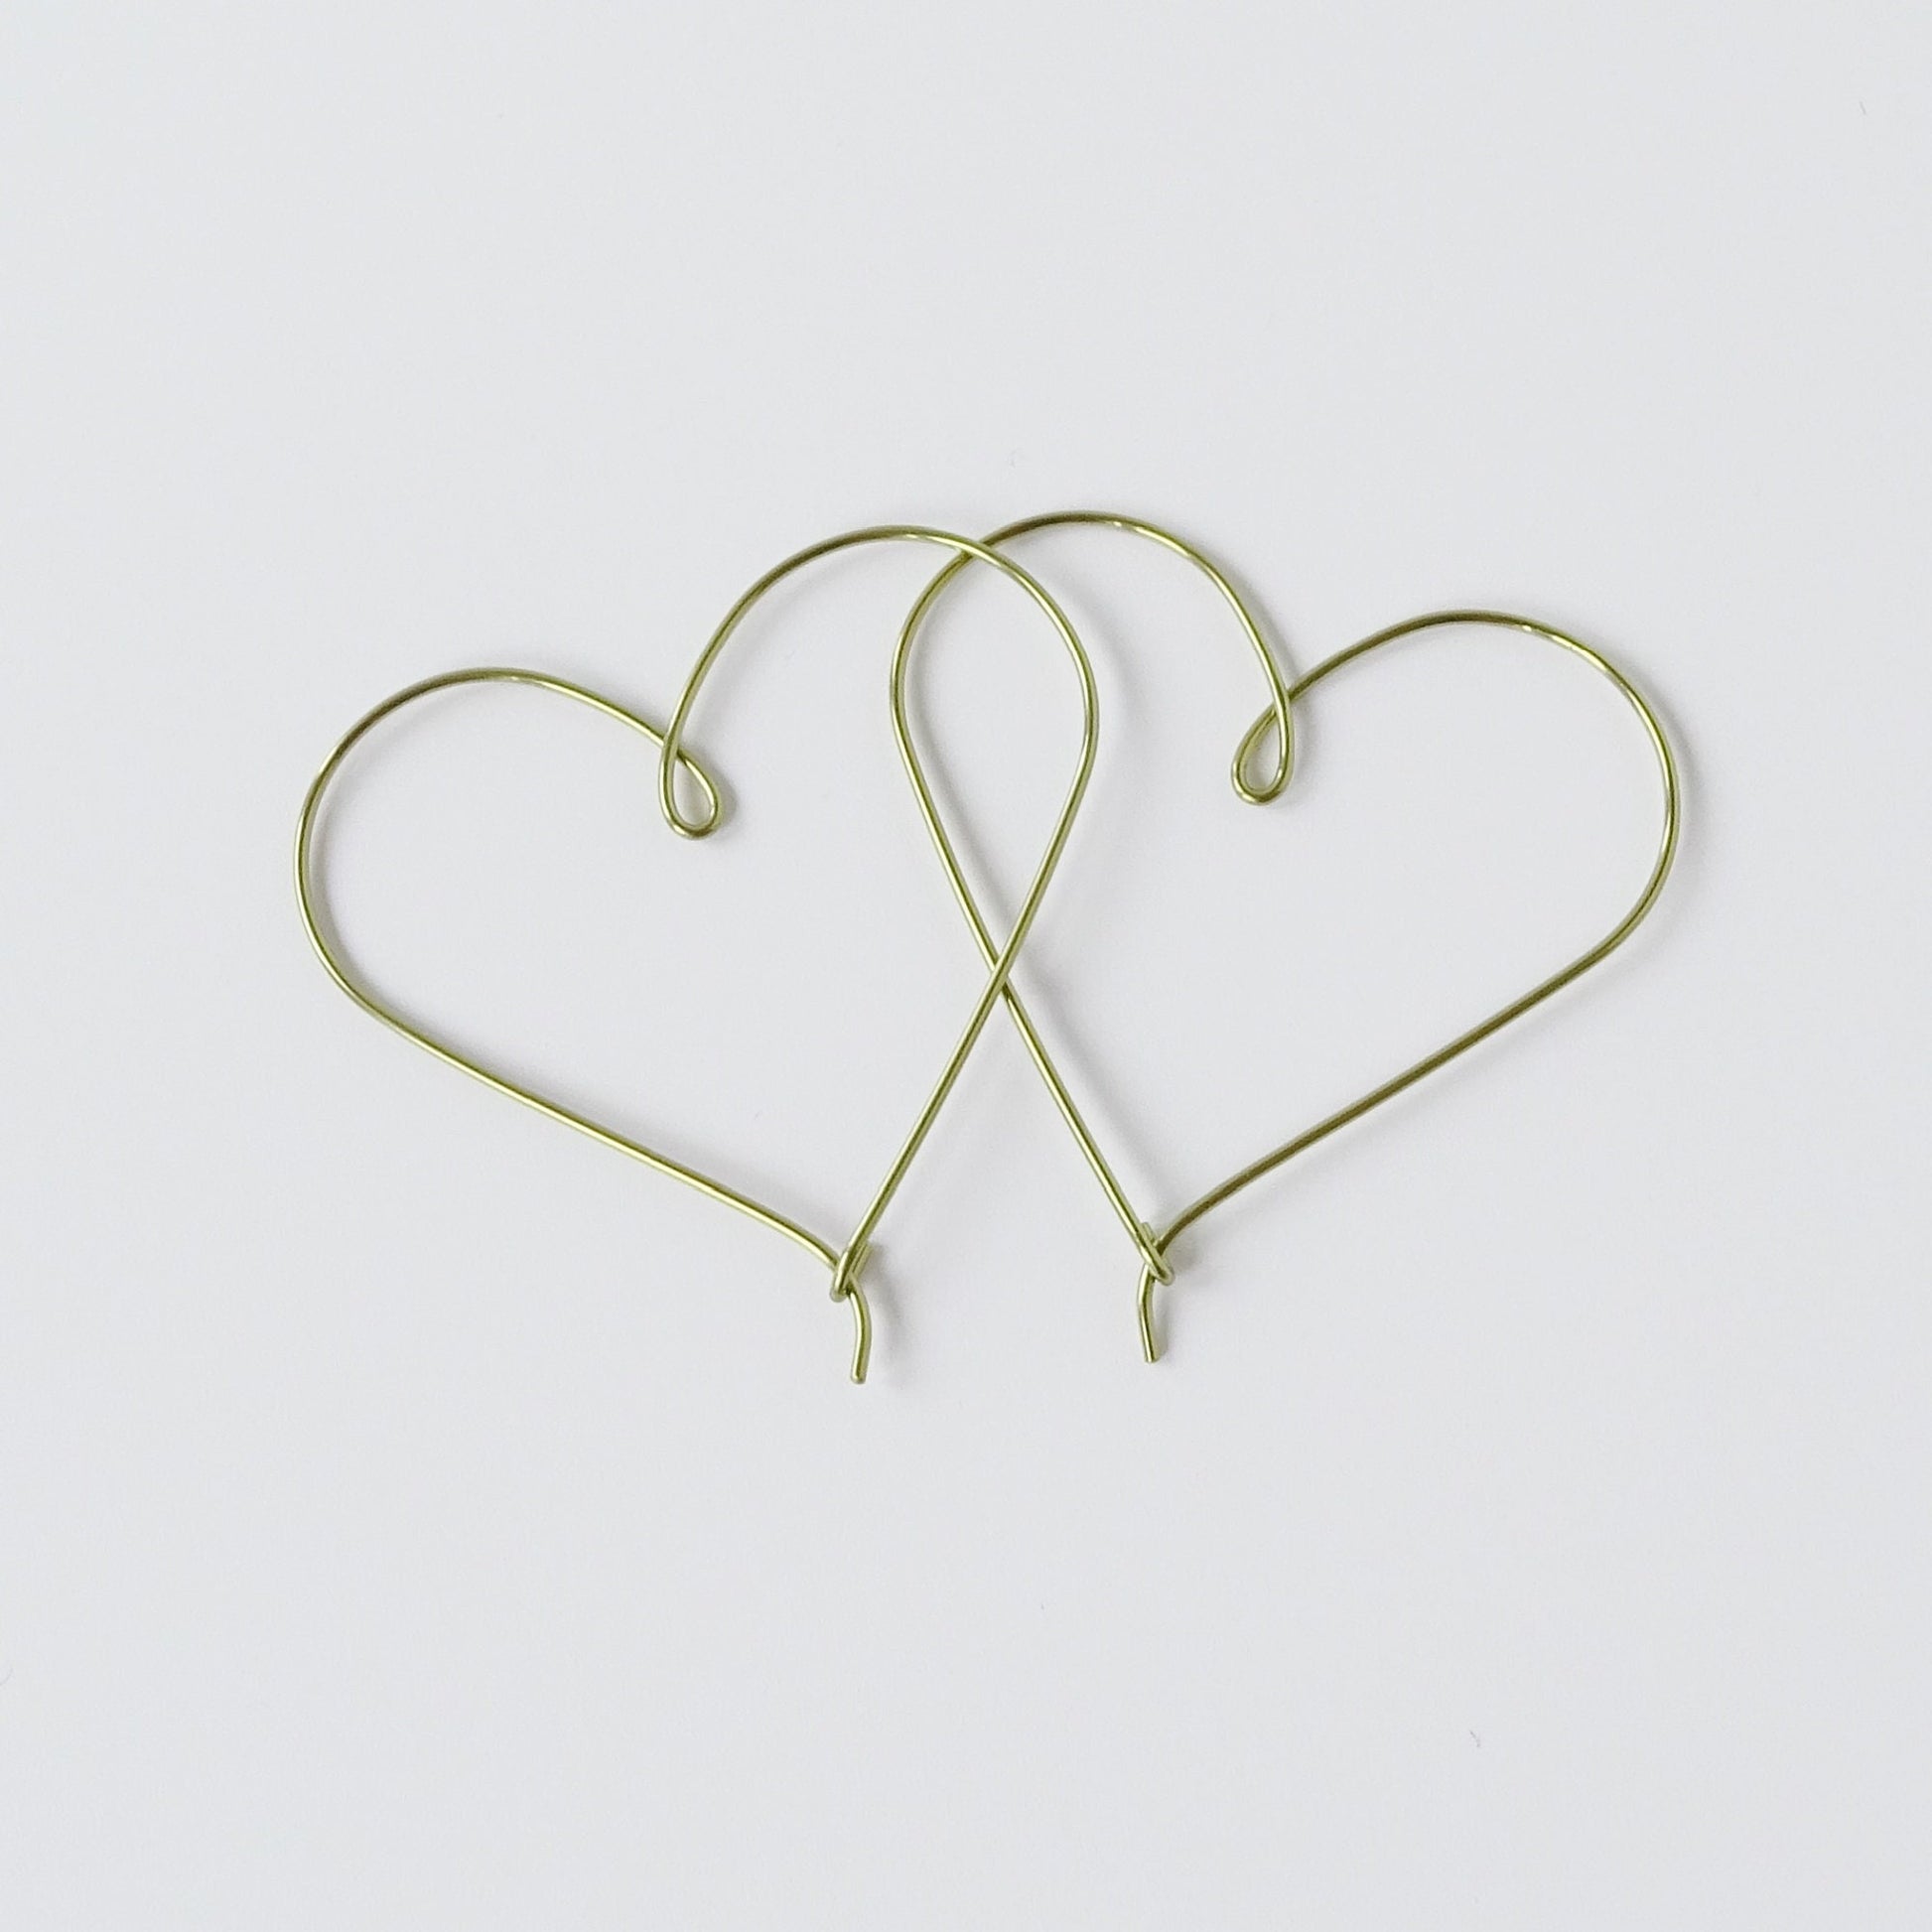 Medium Heart Hoops Gold Niobium Hoop Earrings, Nickel Free Hypoallergenic Yellow Gold Anodized Niobium Heart Hoop, Sensitive Ears Earrings